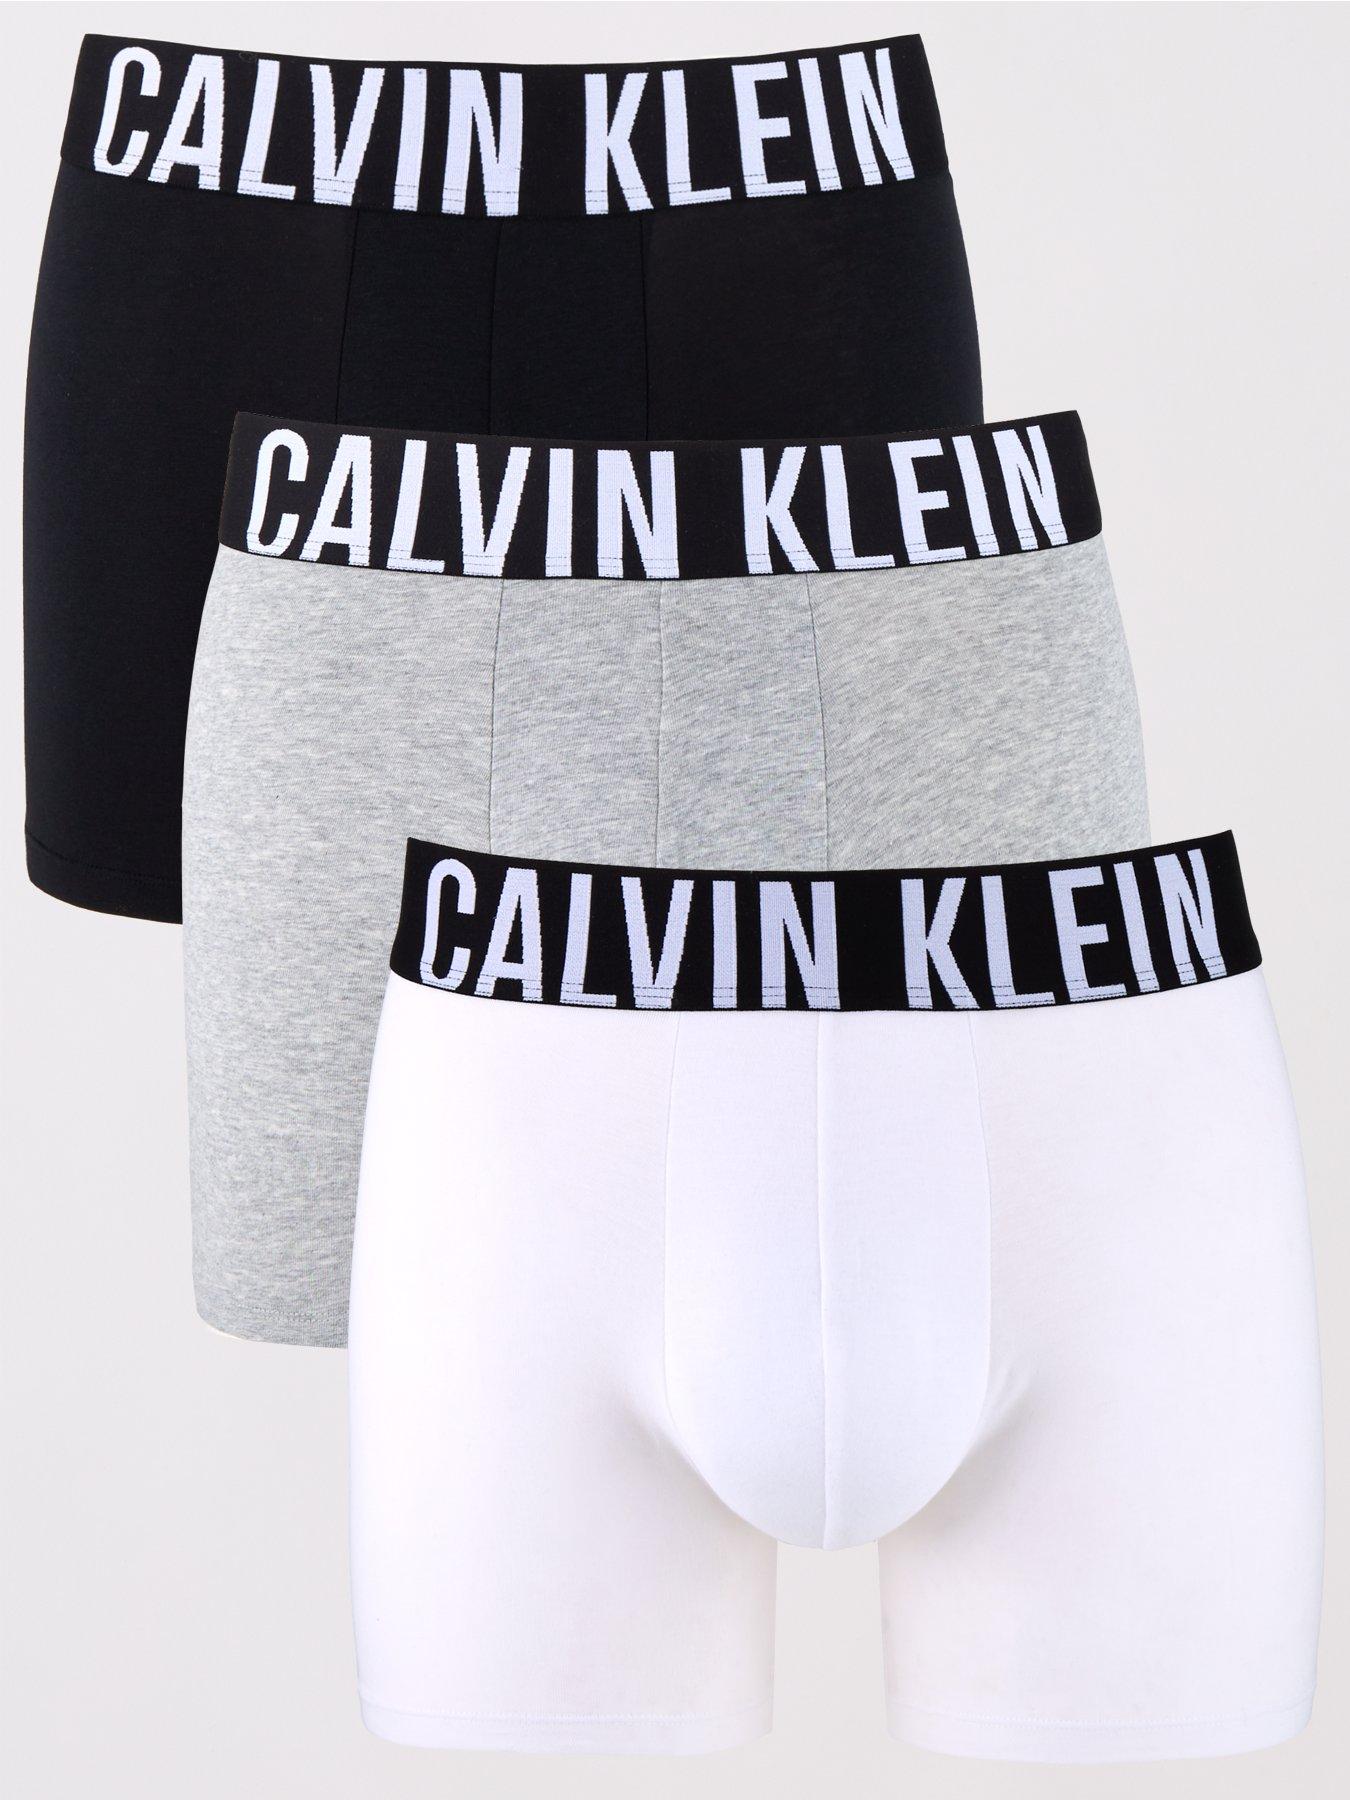 2, Calvin klein, Underwear & socks, Men